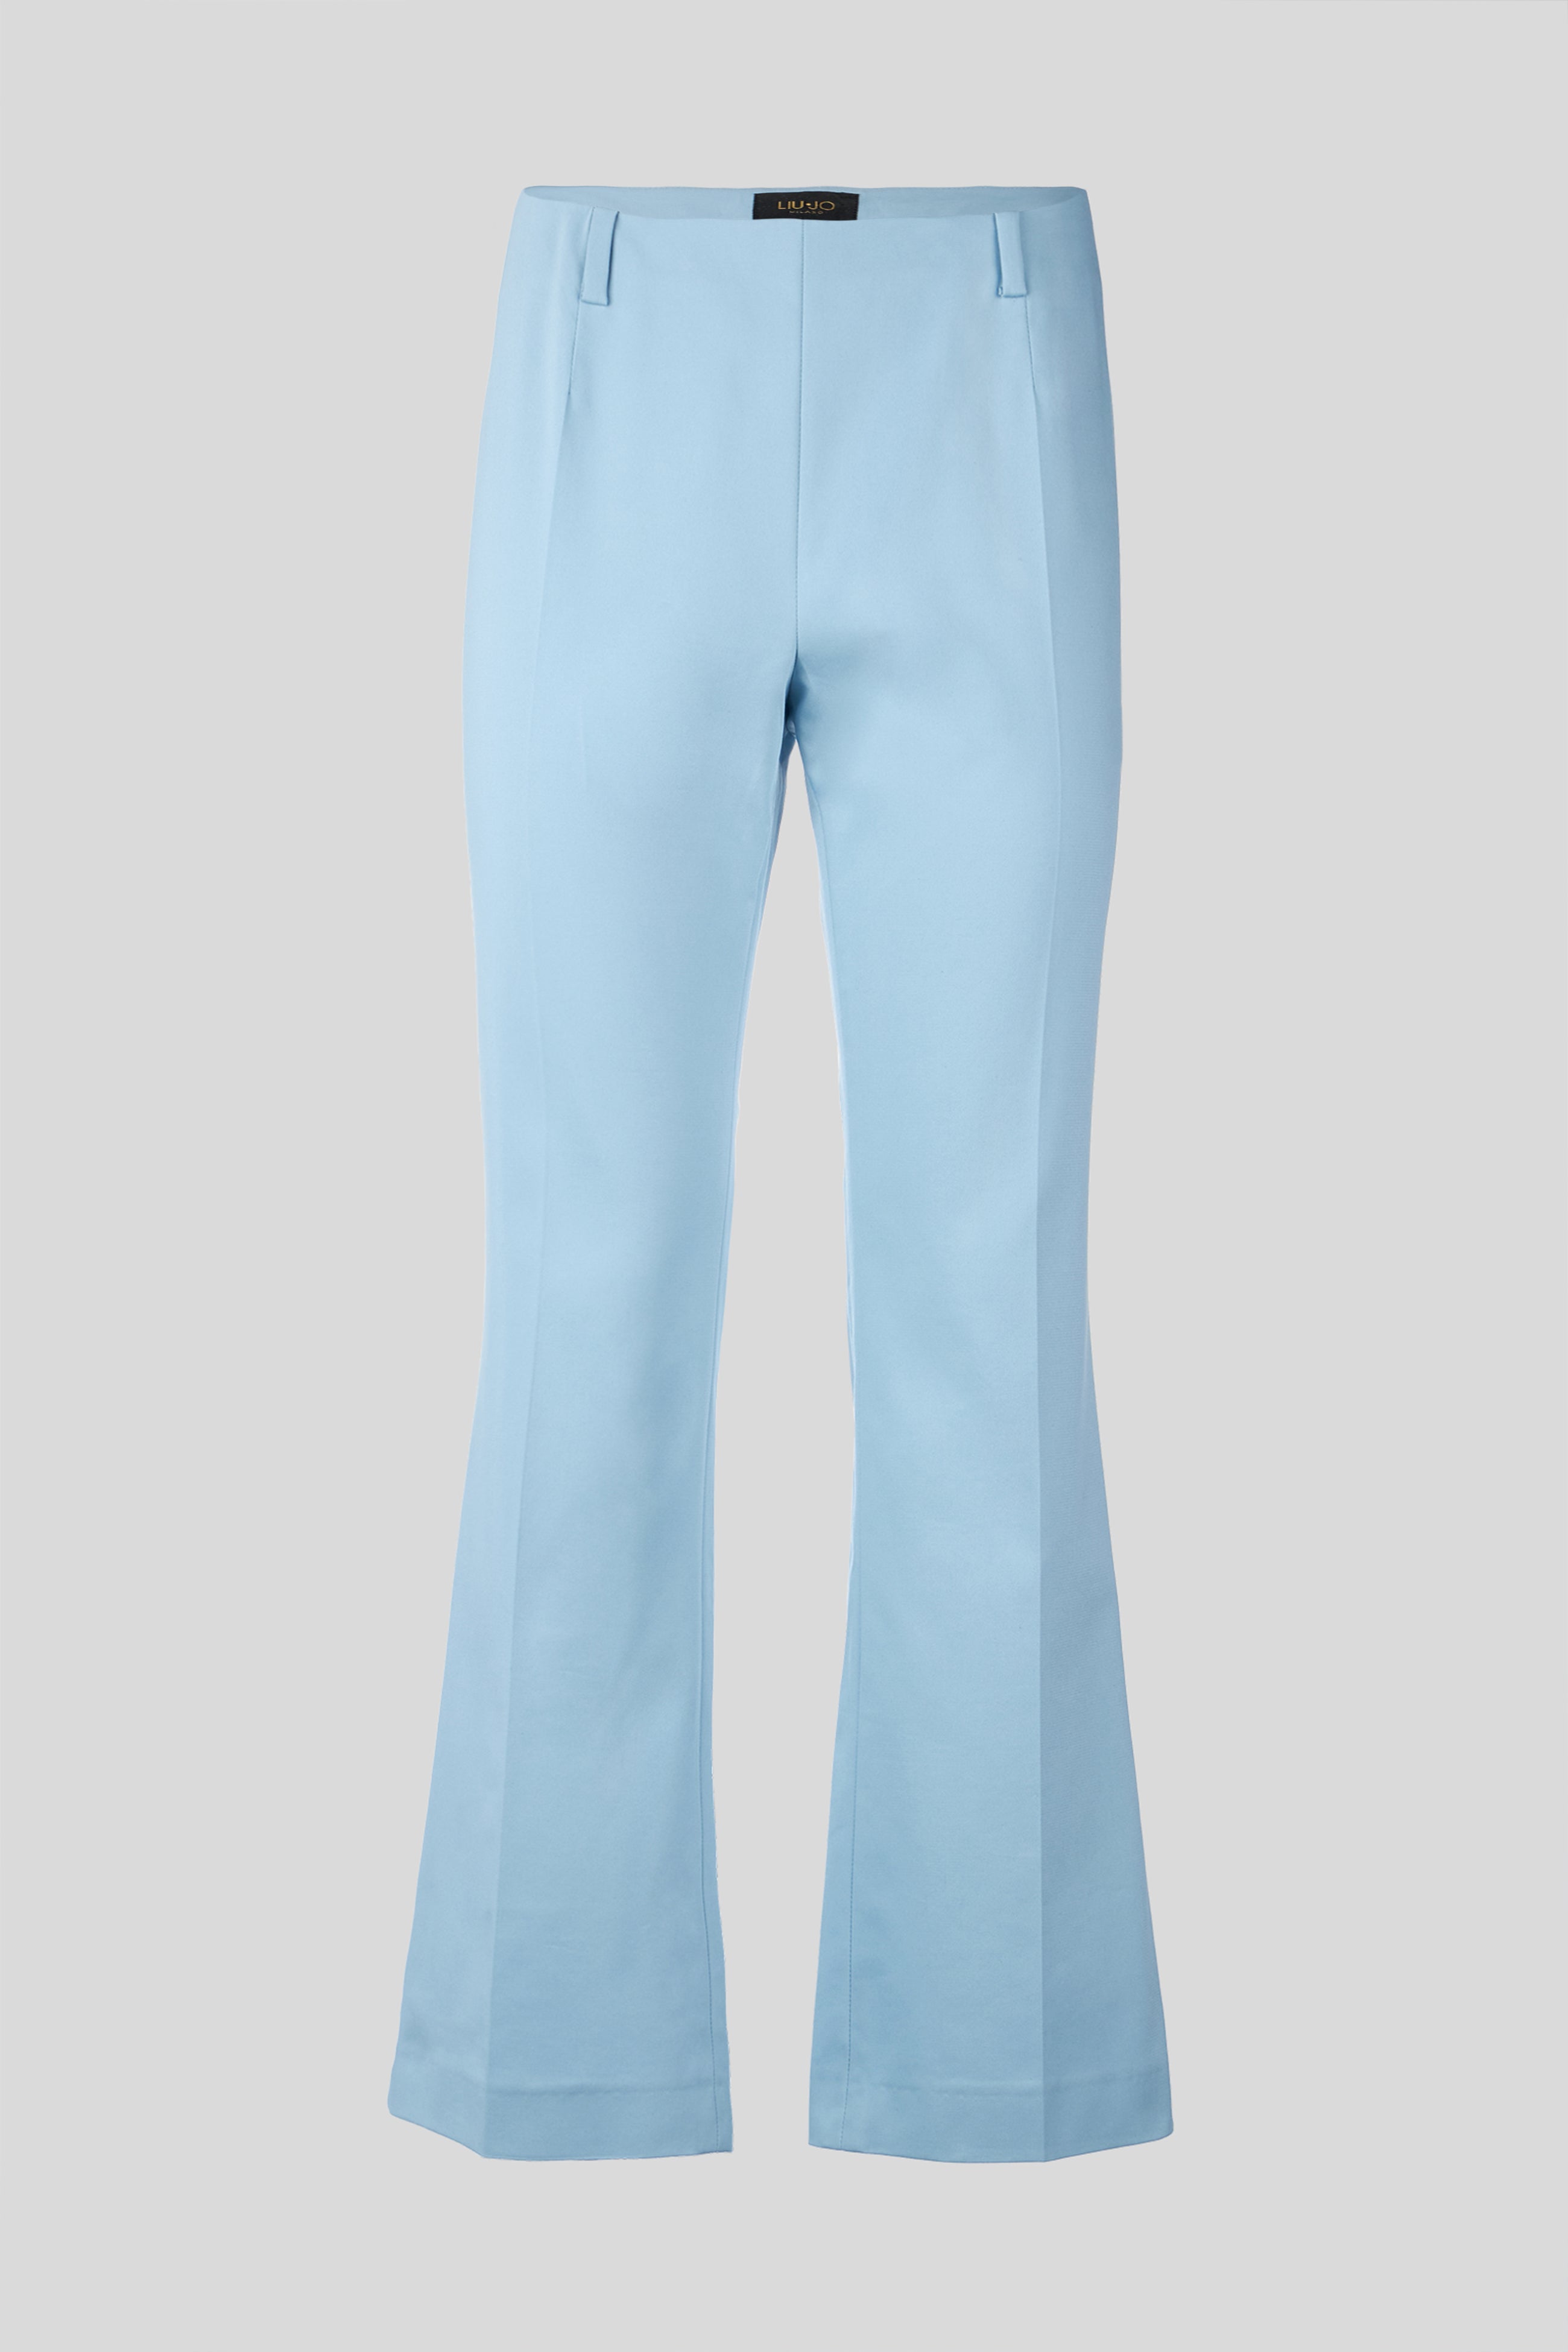 LIU JO Micro Flair Light Blue Pants